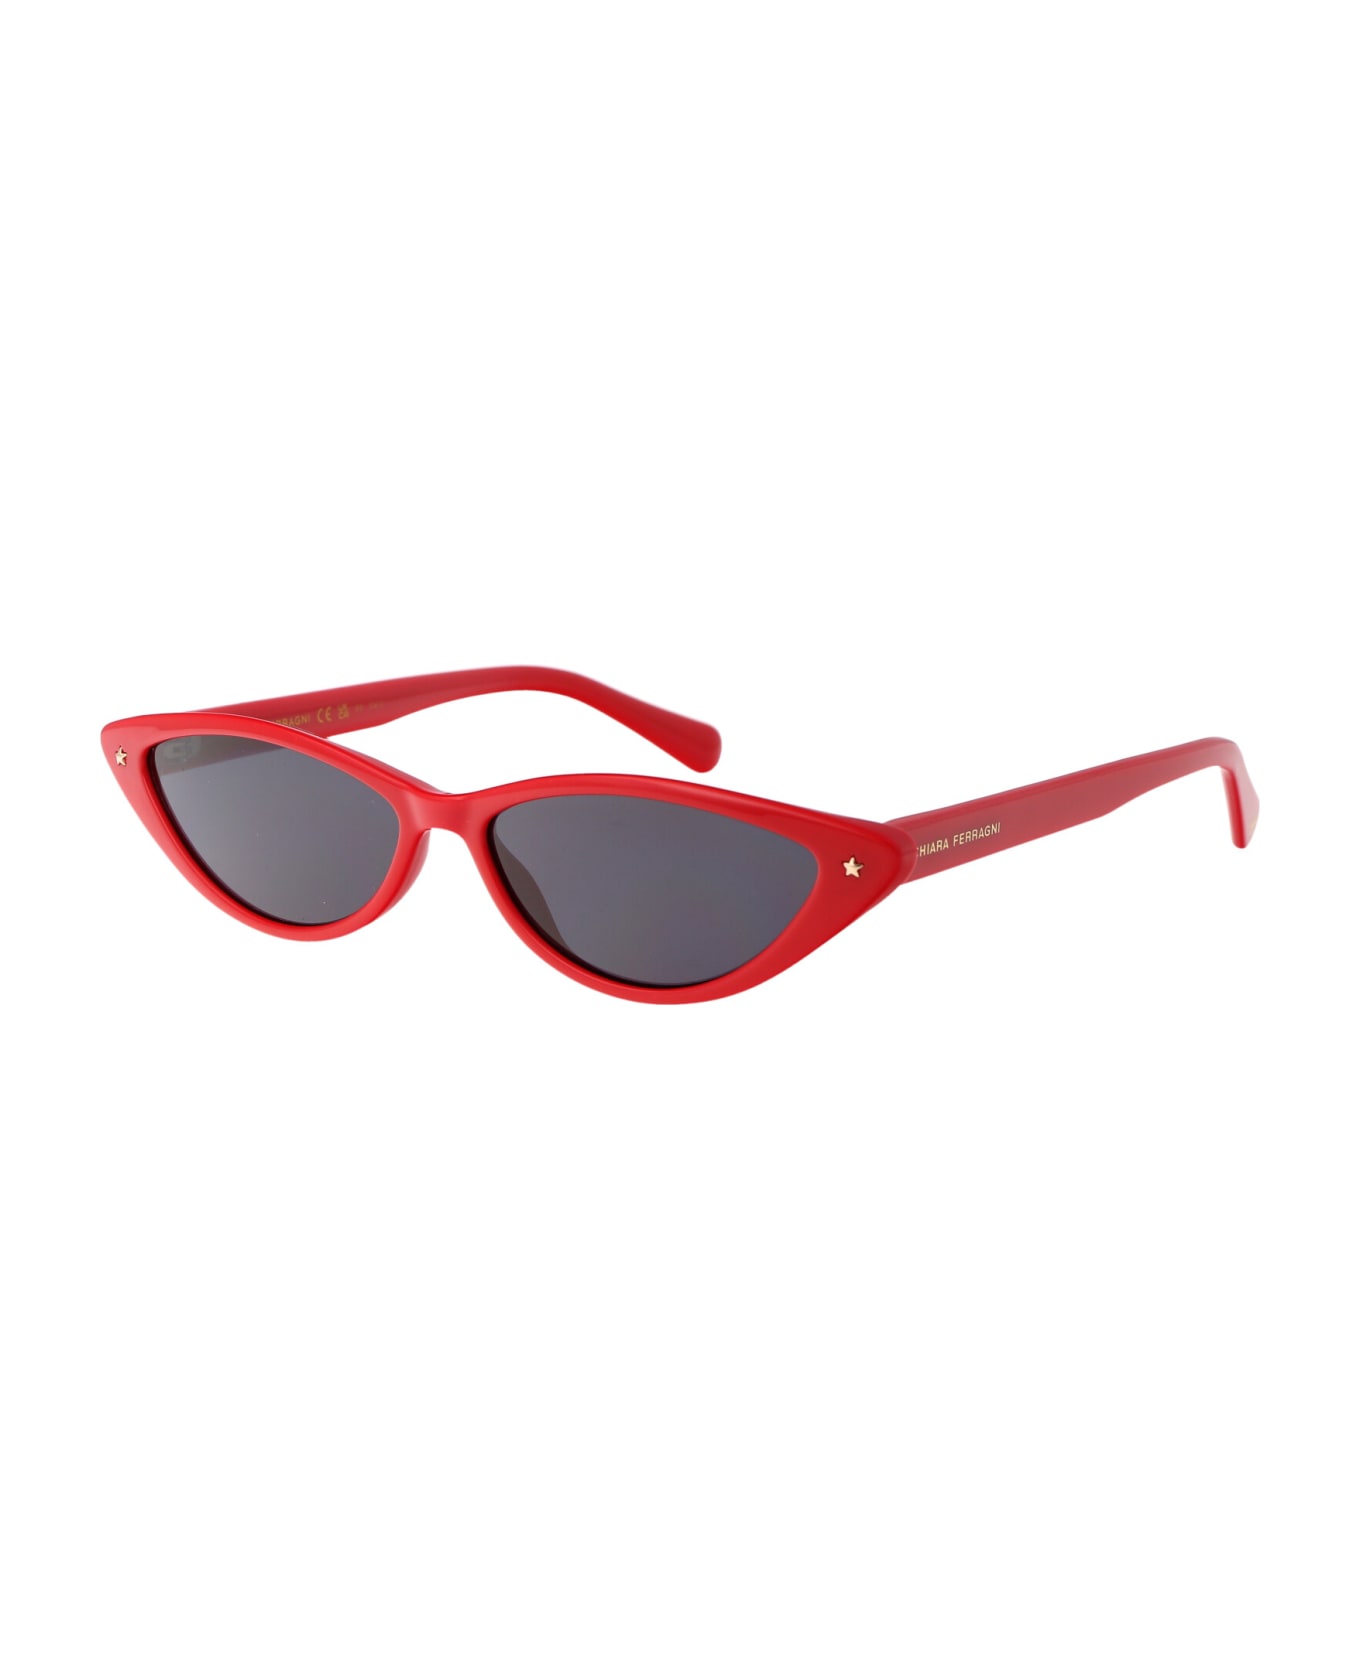 Chiara Ferragni Cf 7033/s Sunglasses - C9AIR RED